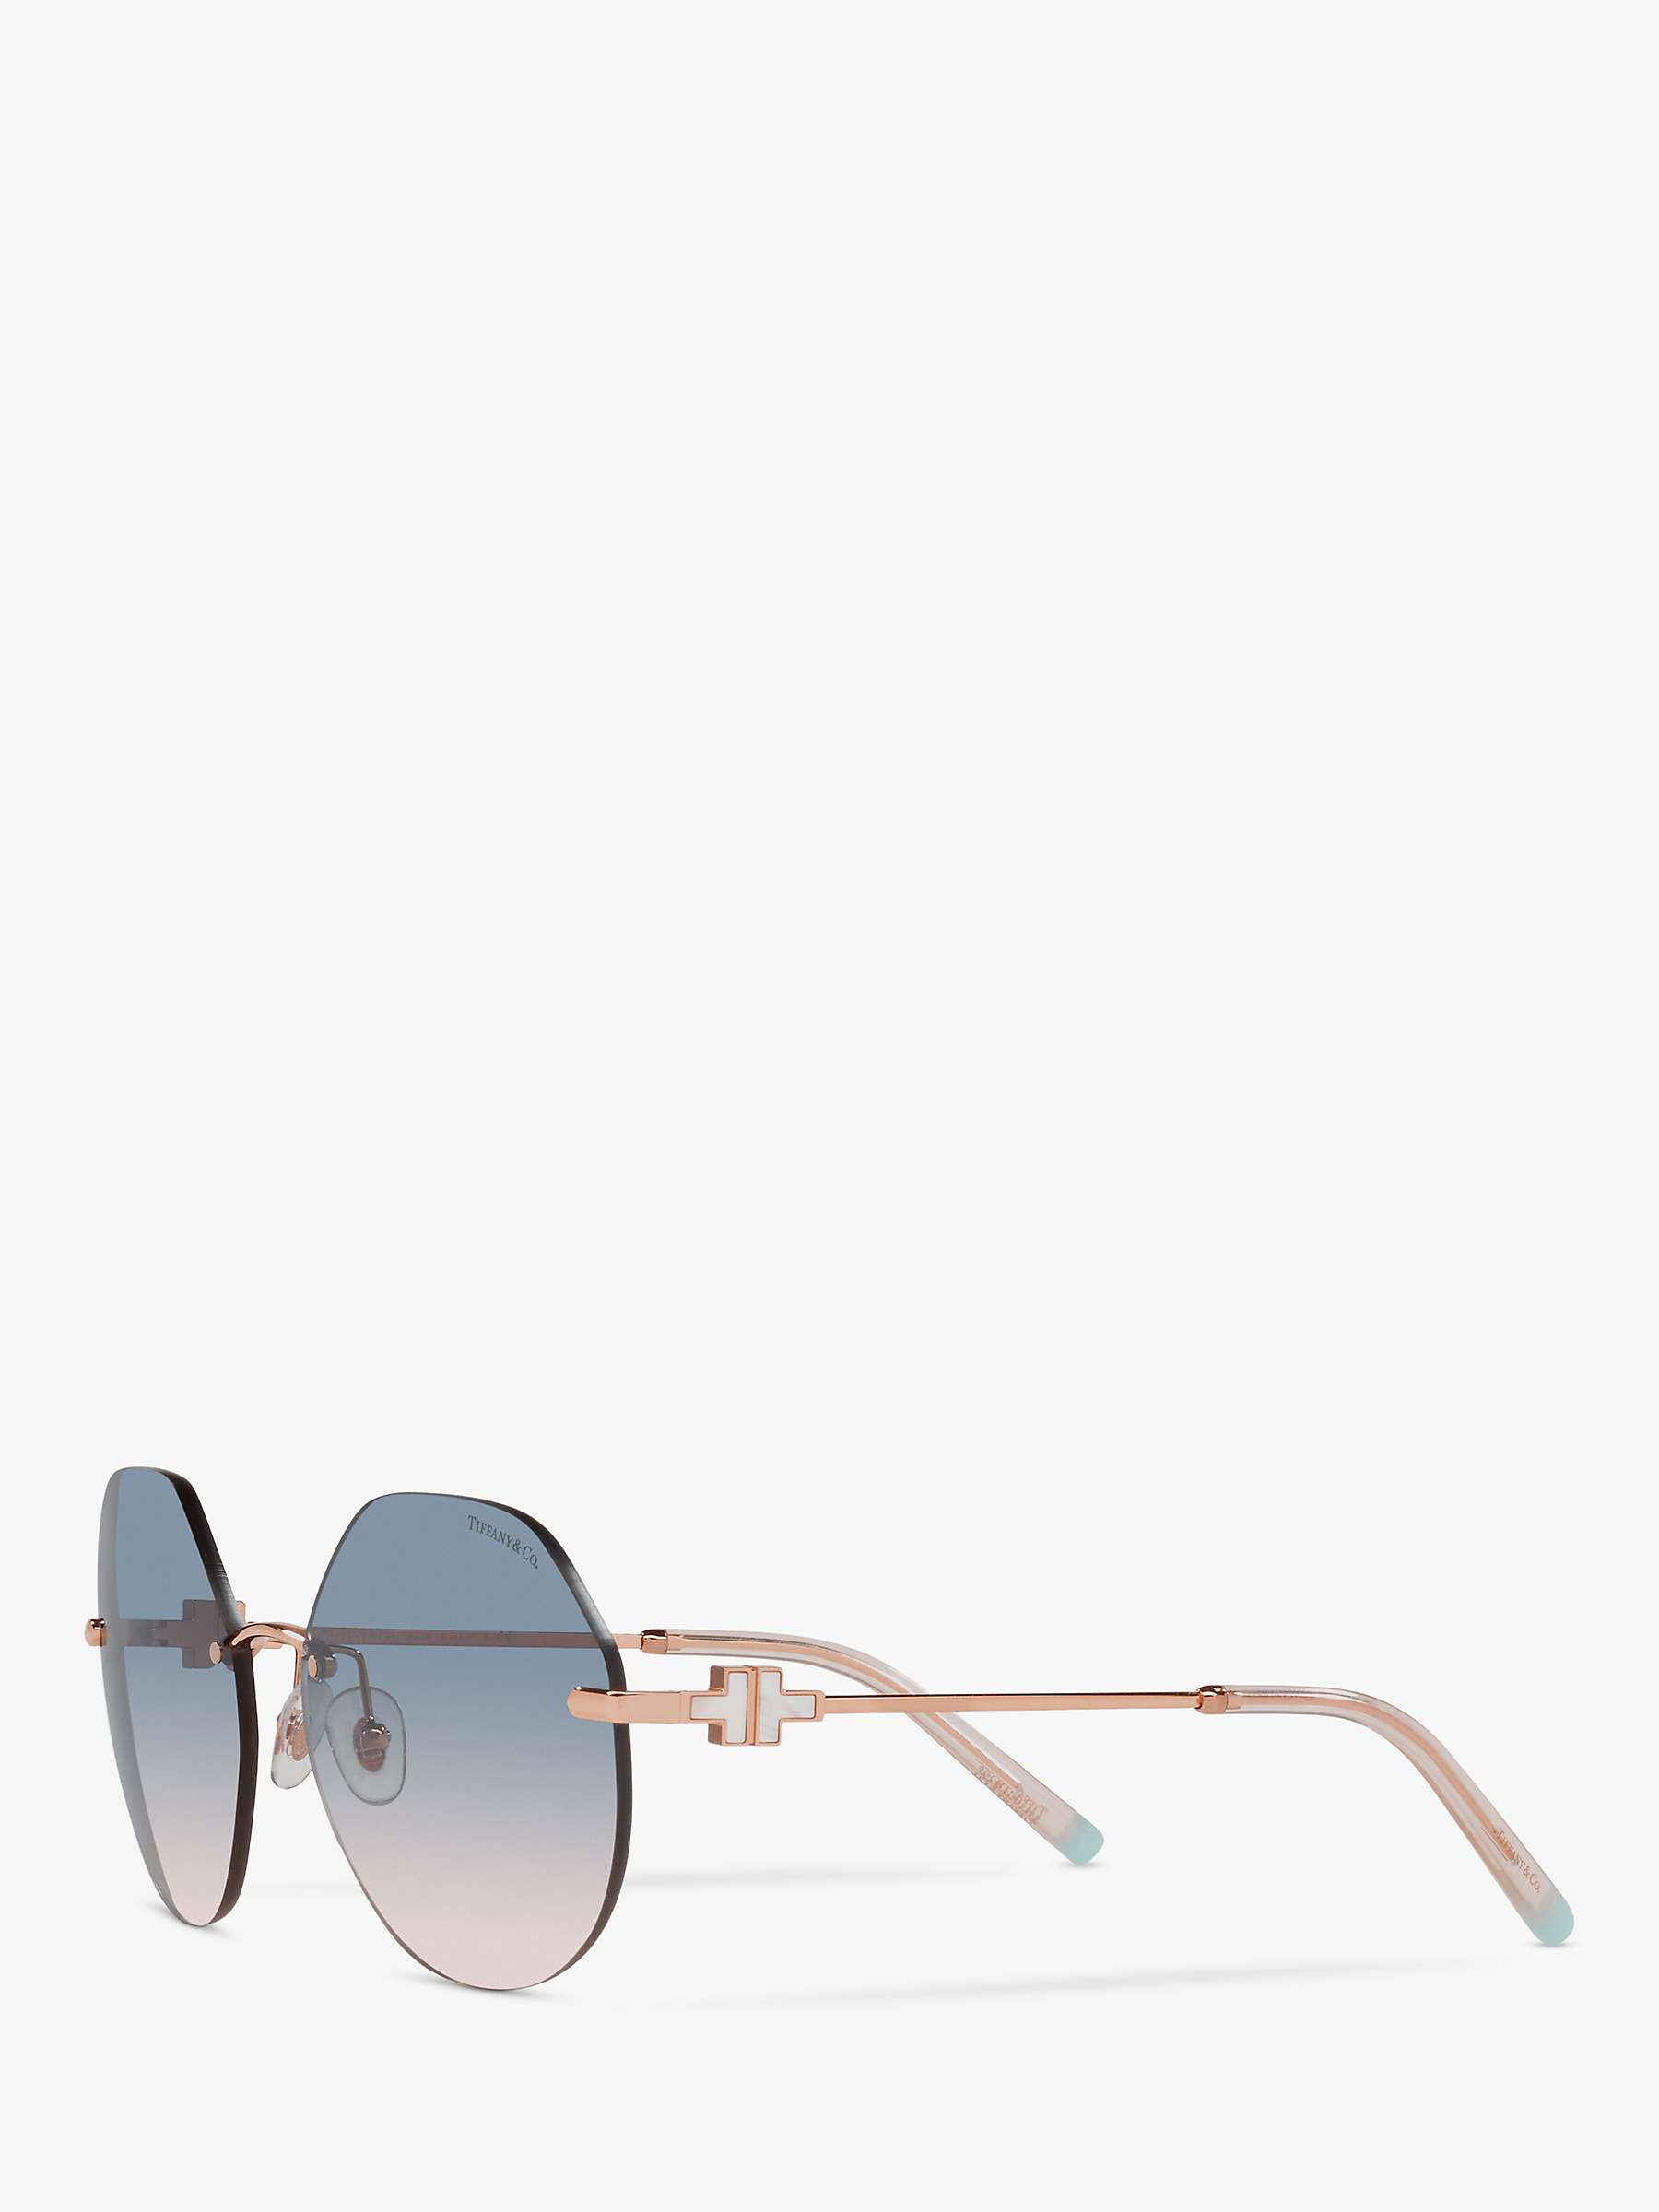 Buy Tiffany & Co TF3077 Women's Irregular Sunglasses, Rubedo Online at johnlewis.com